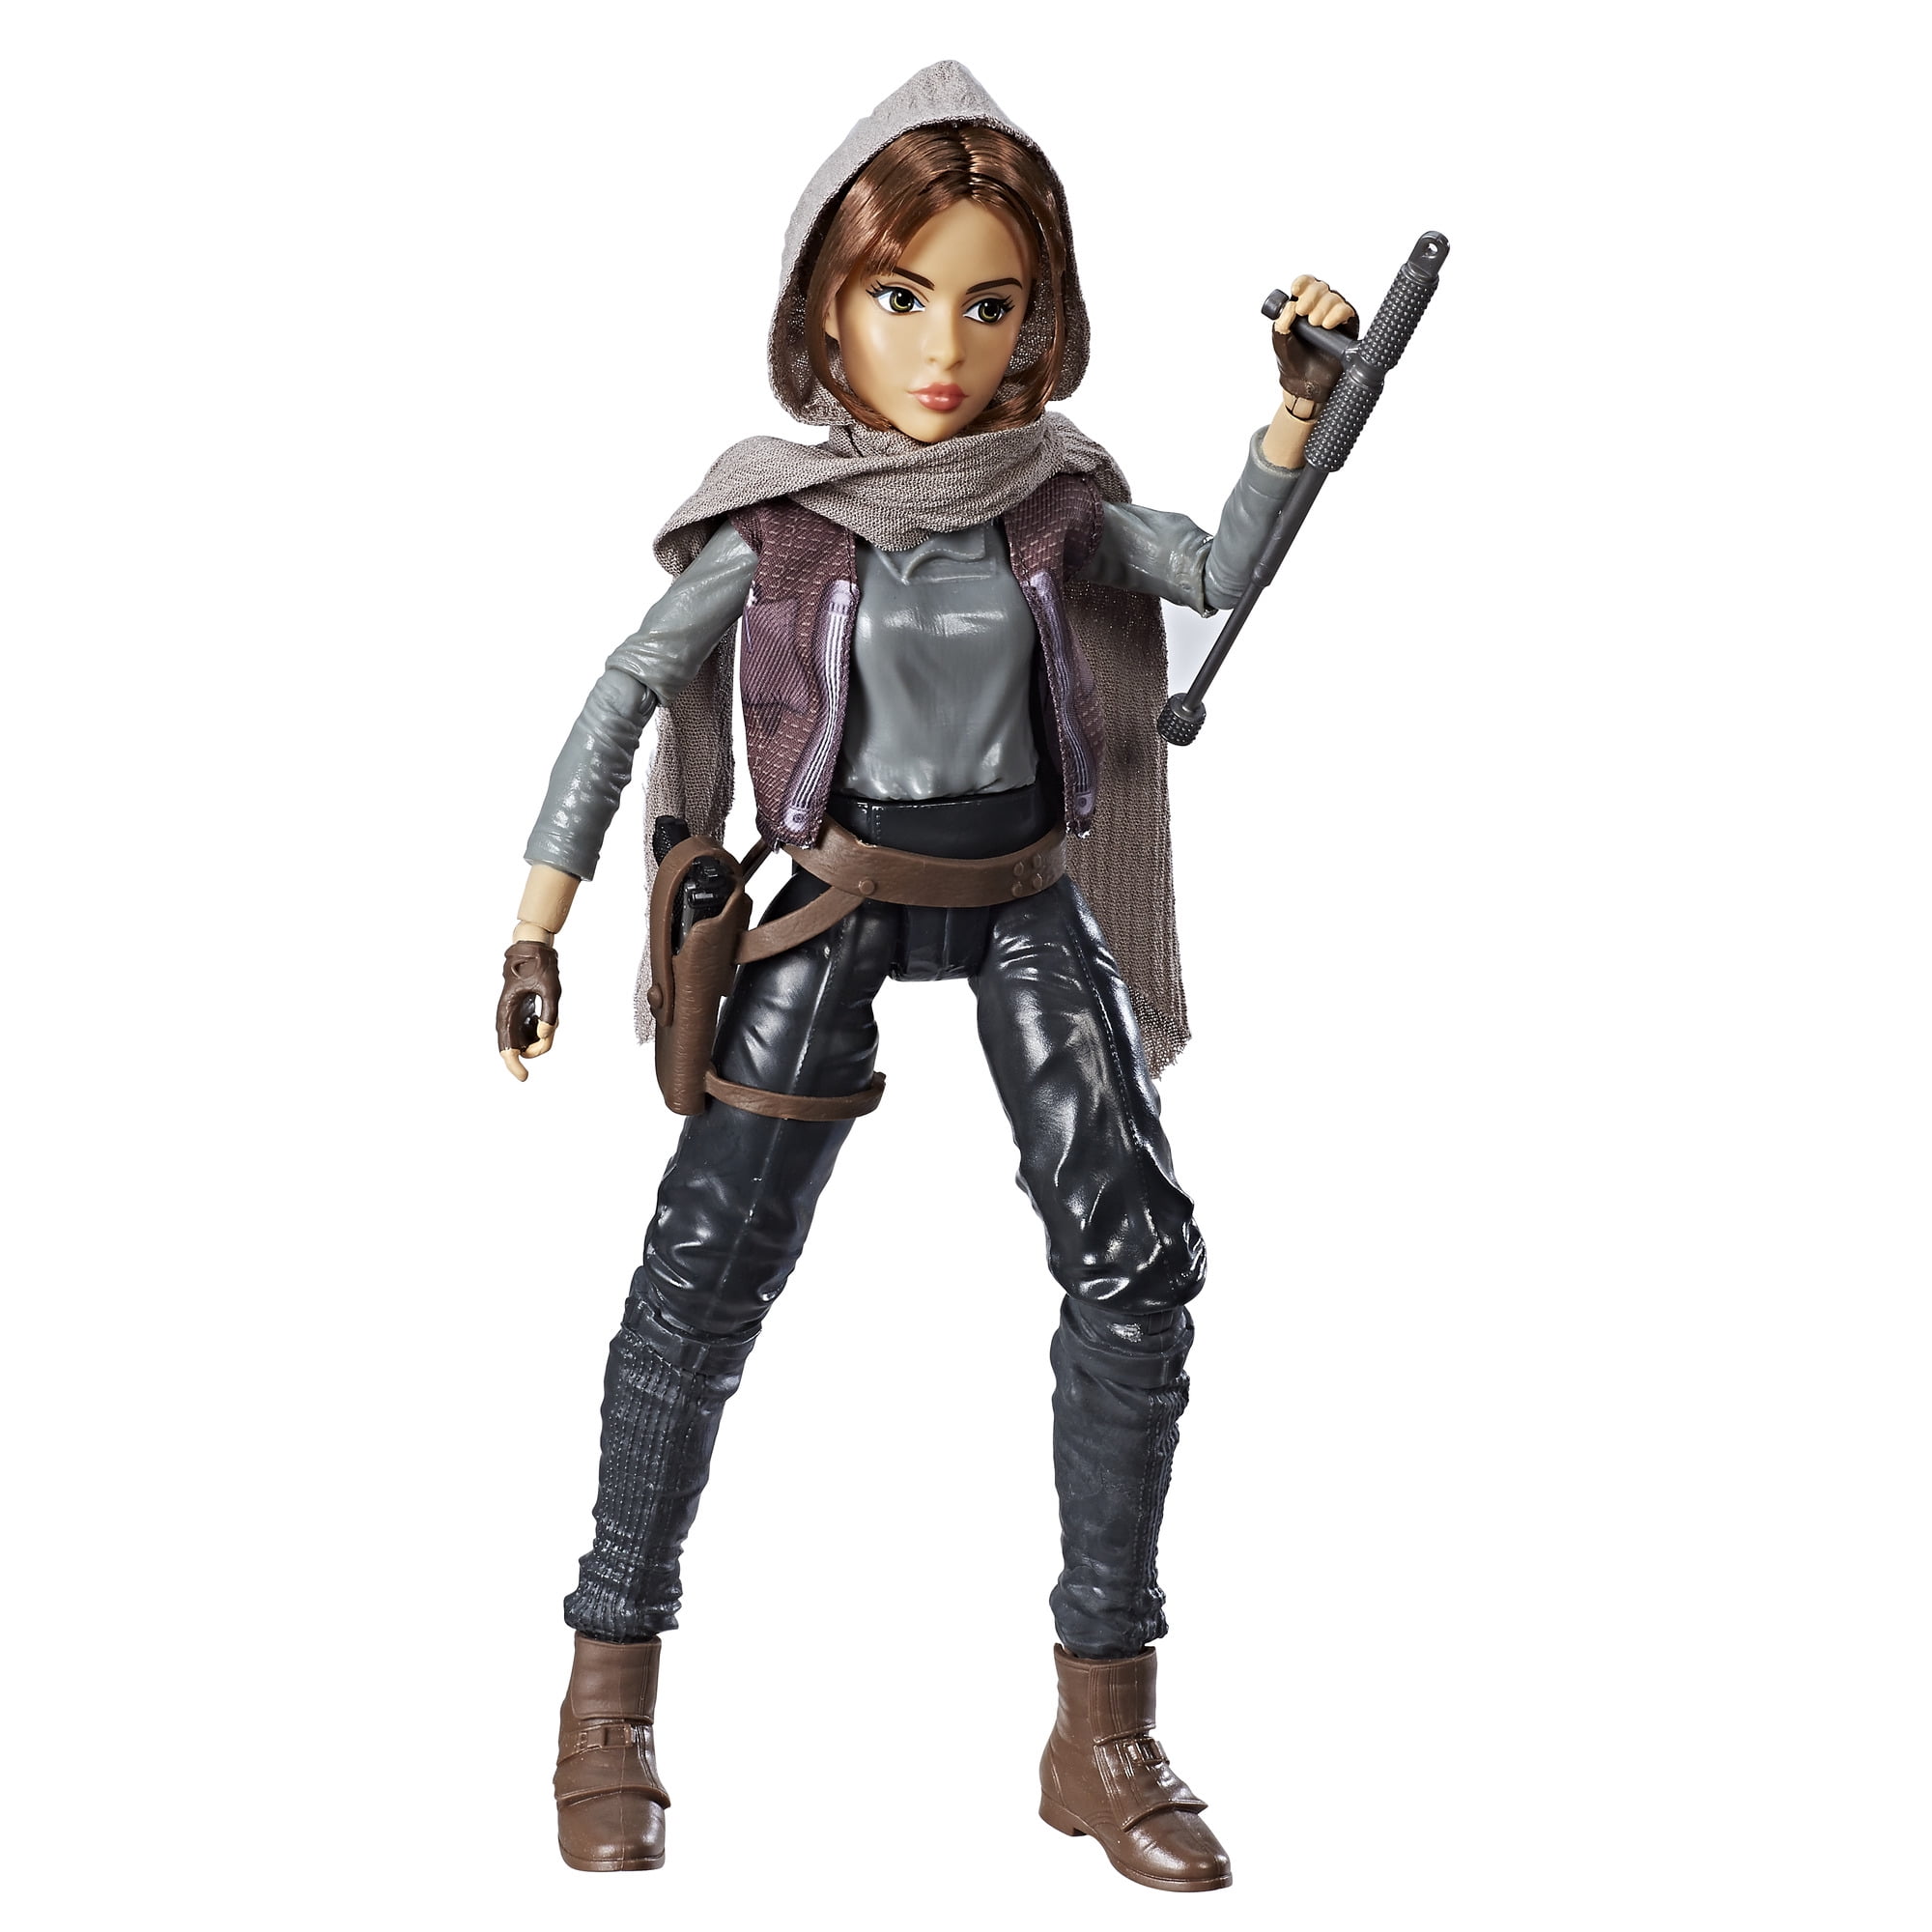 Star Wars Forces of Destiny Rey of Jakku 12" Doll New in Box 